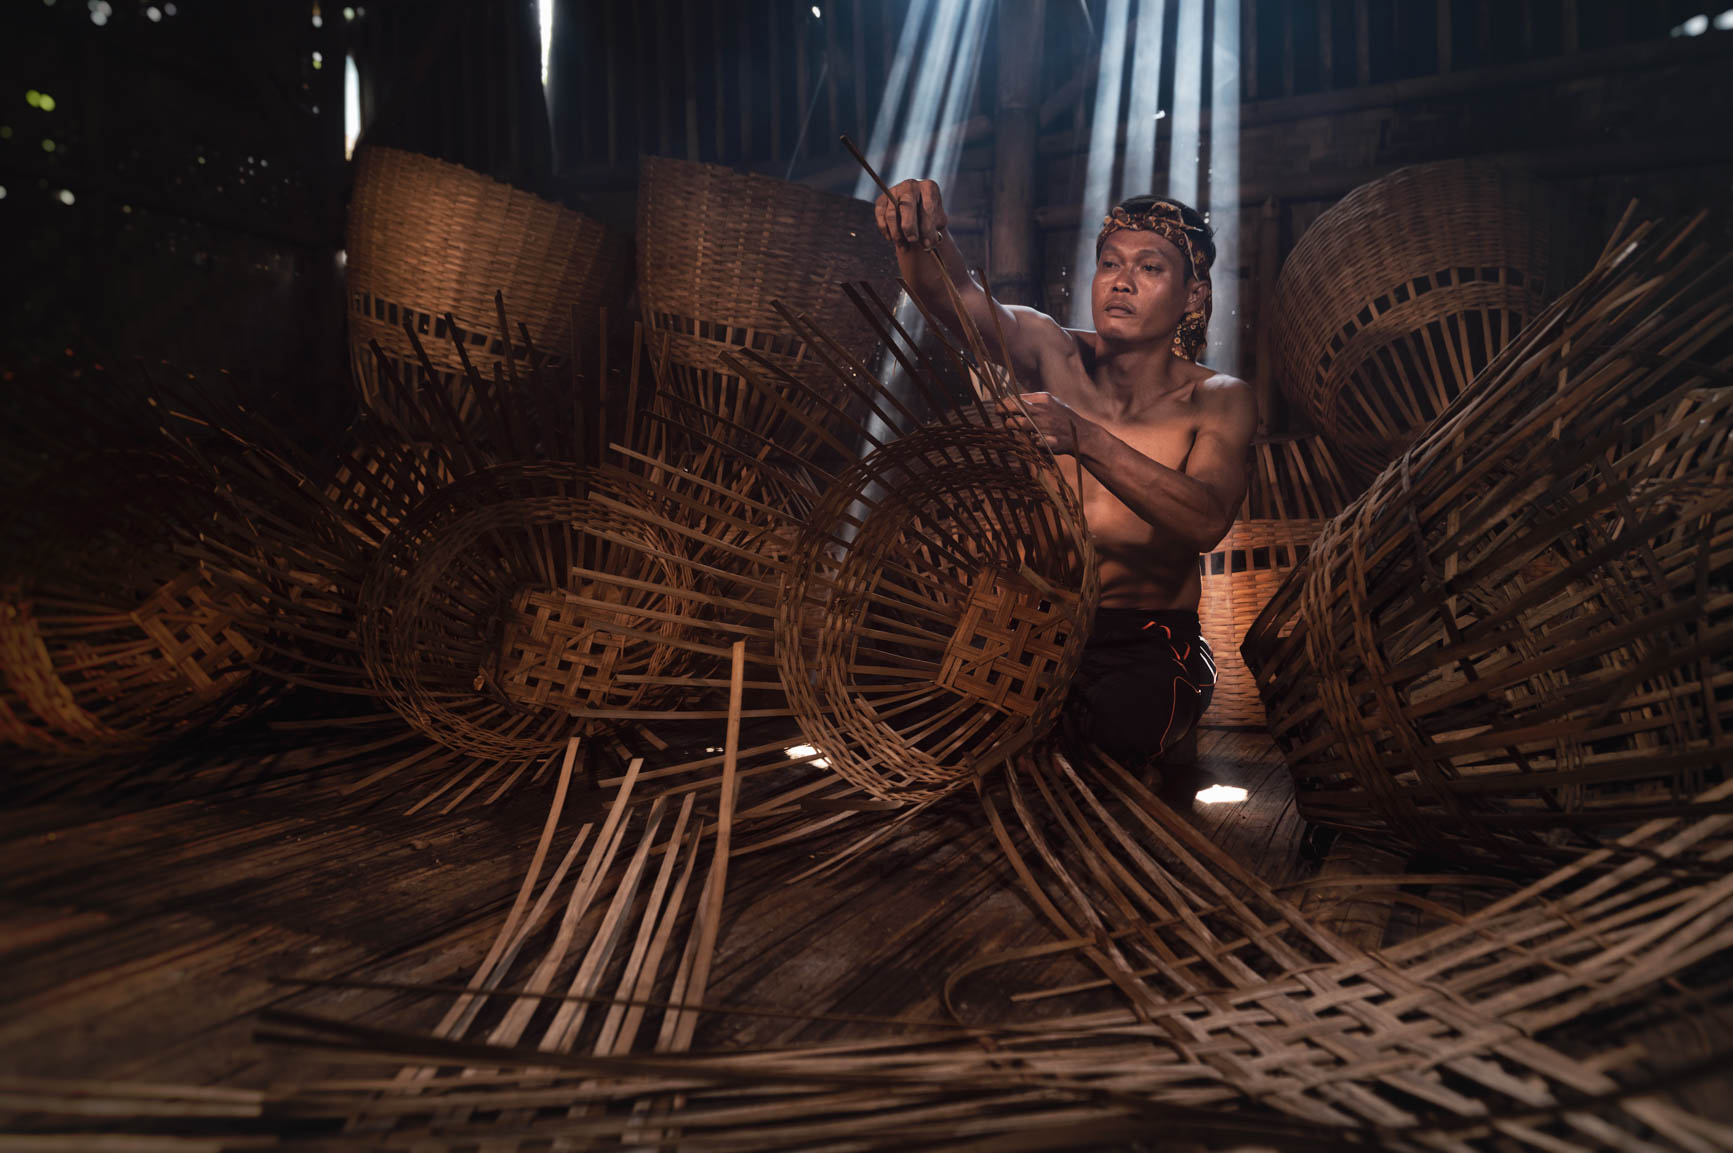 .: Basket weaving :. ...